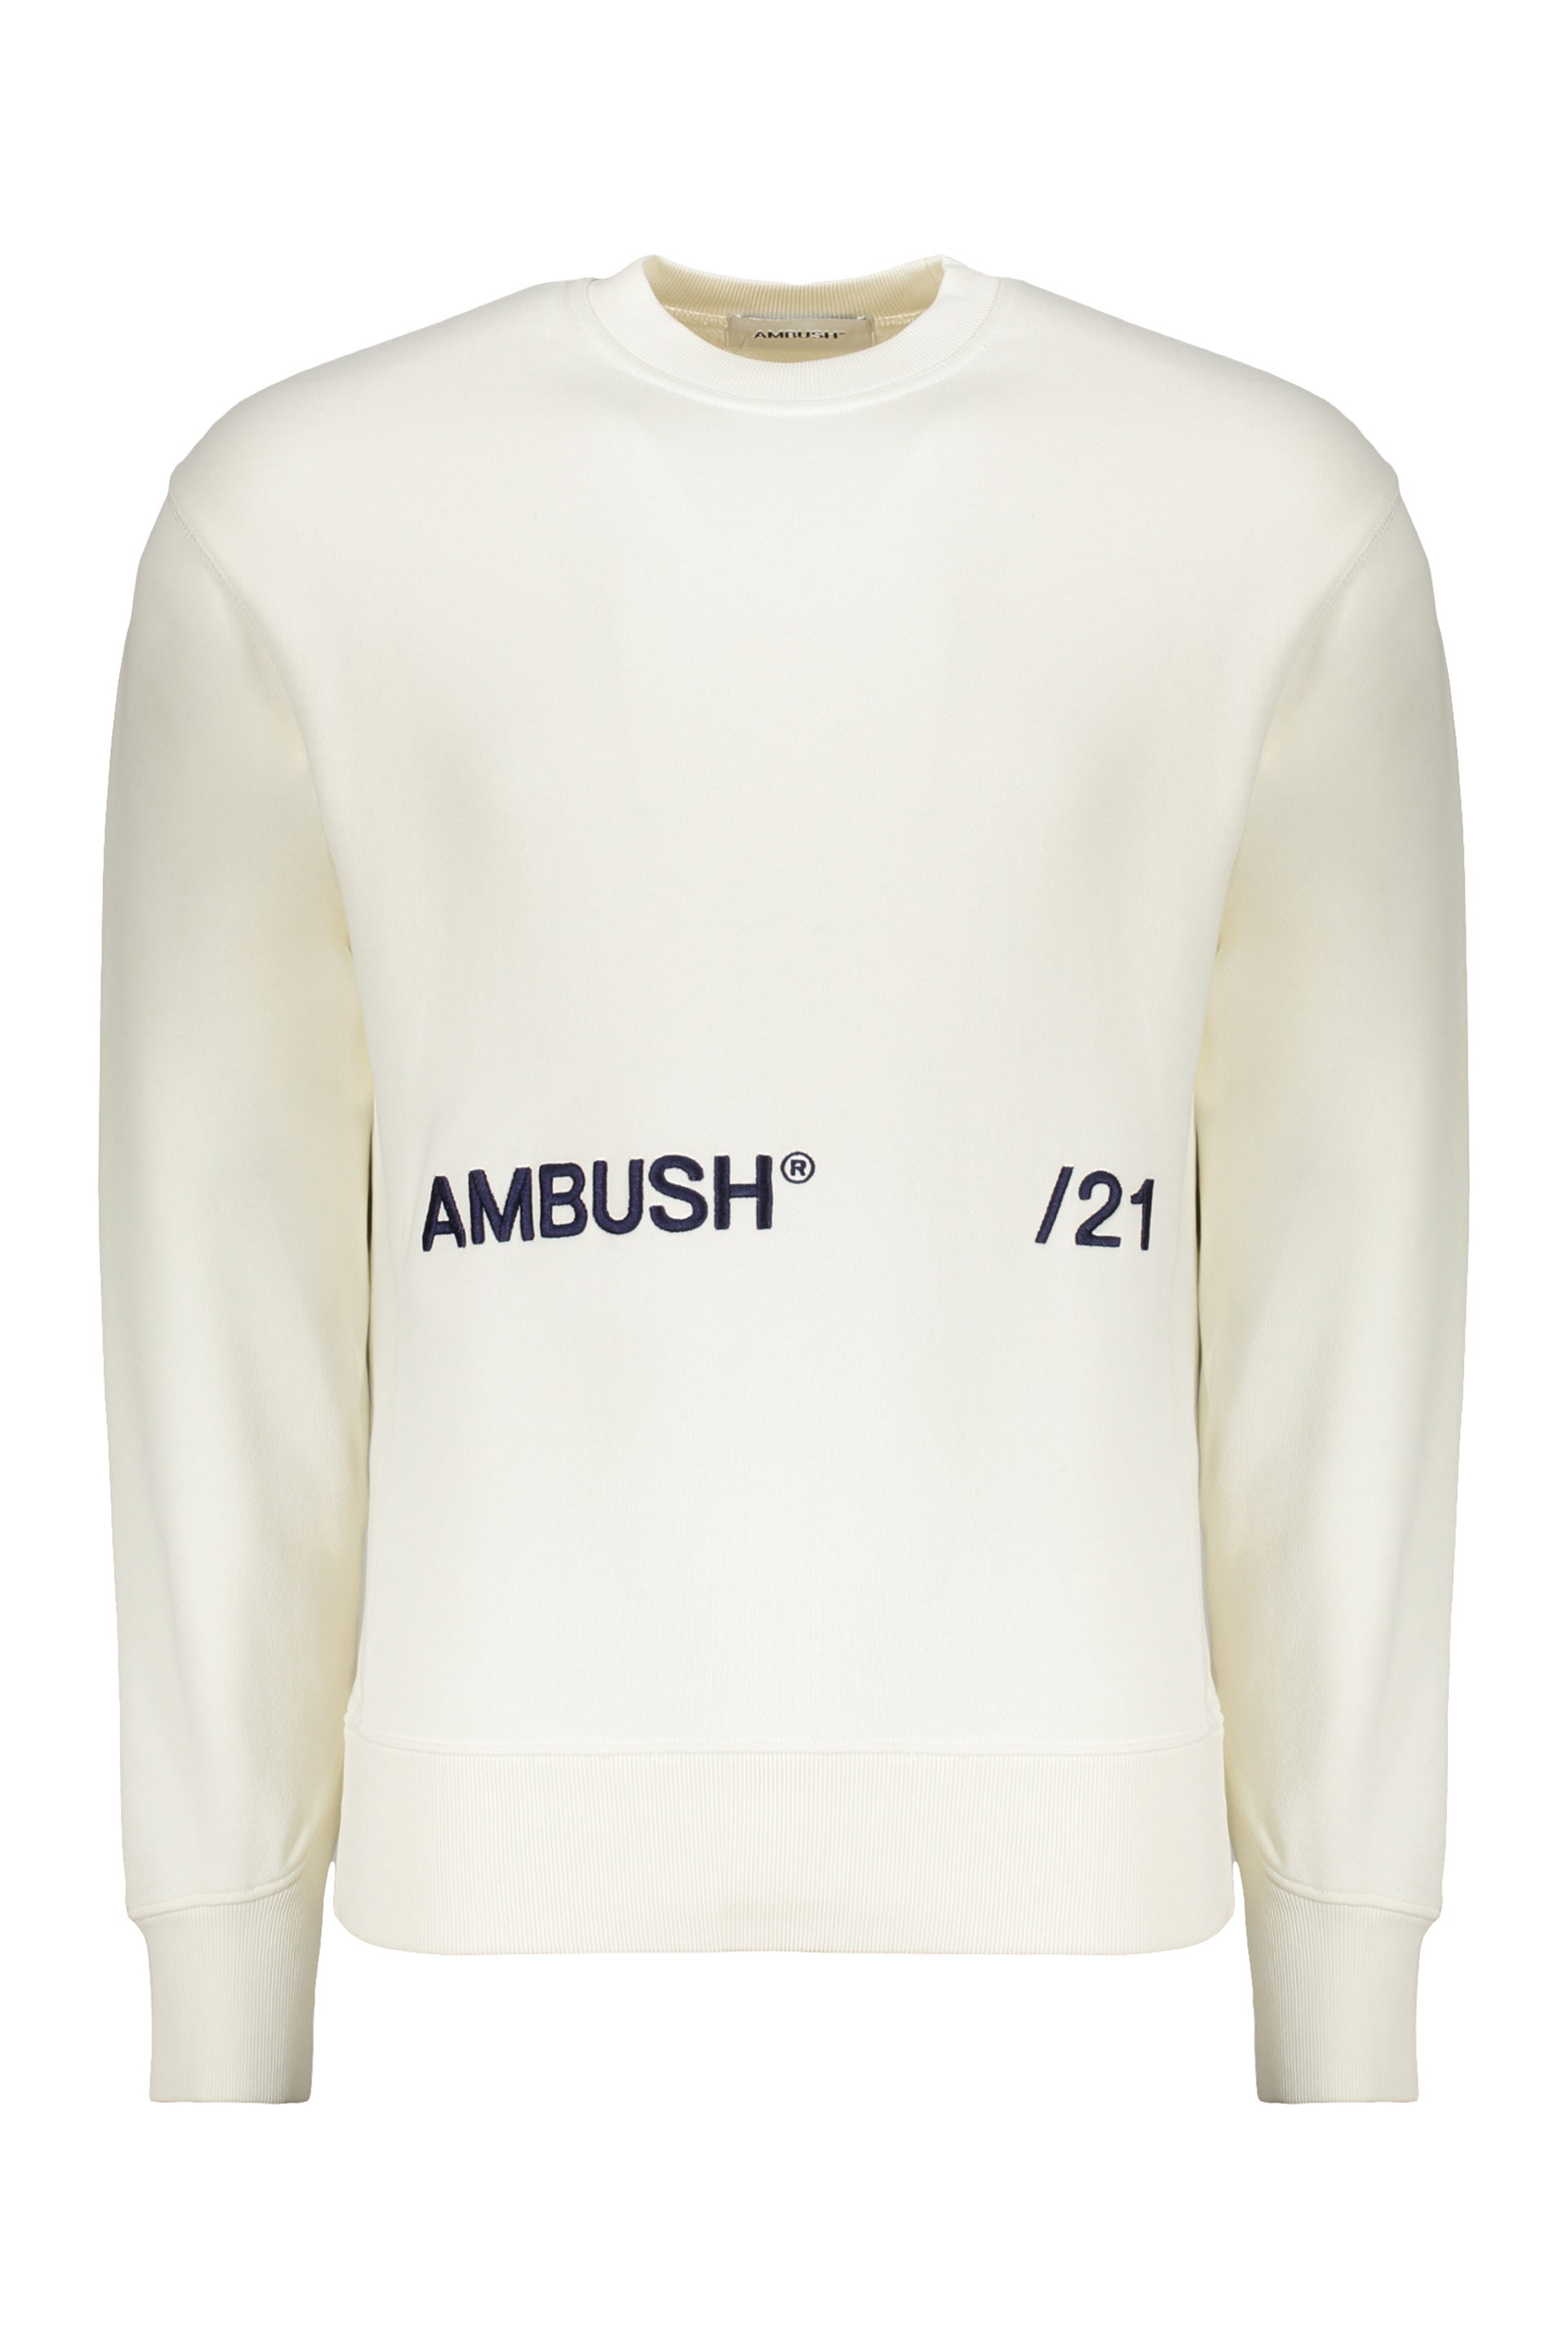 AMBUSH-OUTLET-SALE-Logo-embroidered-cotton-sweatshirt-Strick-XS-ARCHIVE-COLLECTION.jpg